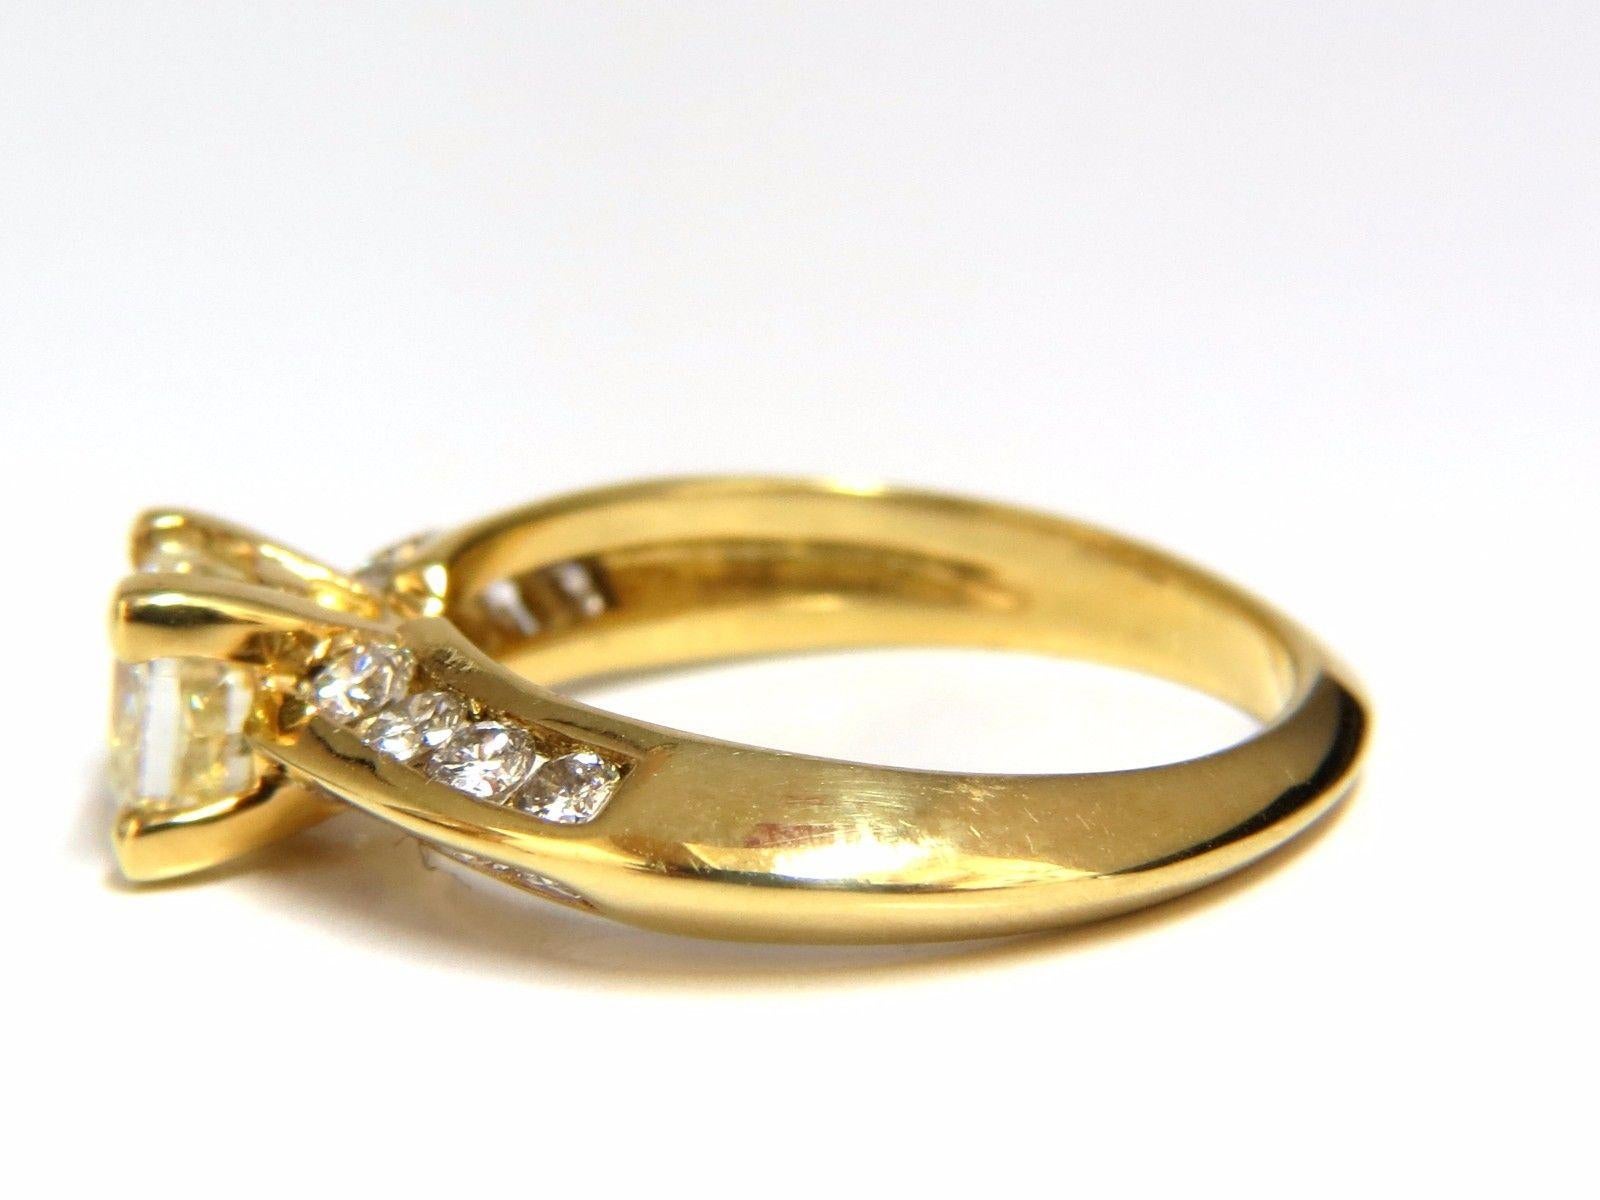 GIA 1.11ct cushion cut diamond ring.

Fancy light yellow color

